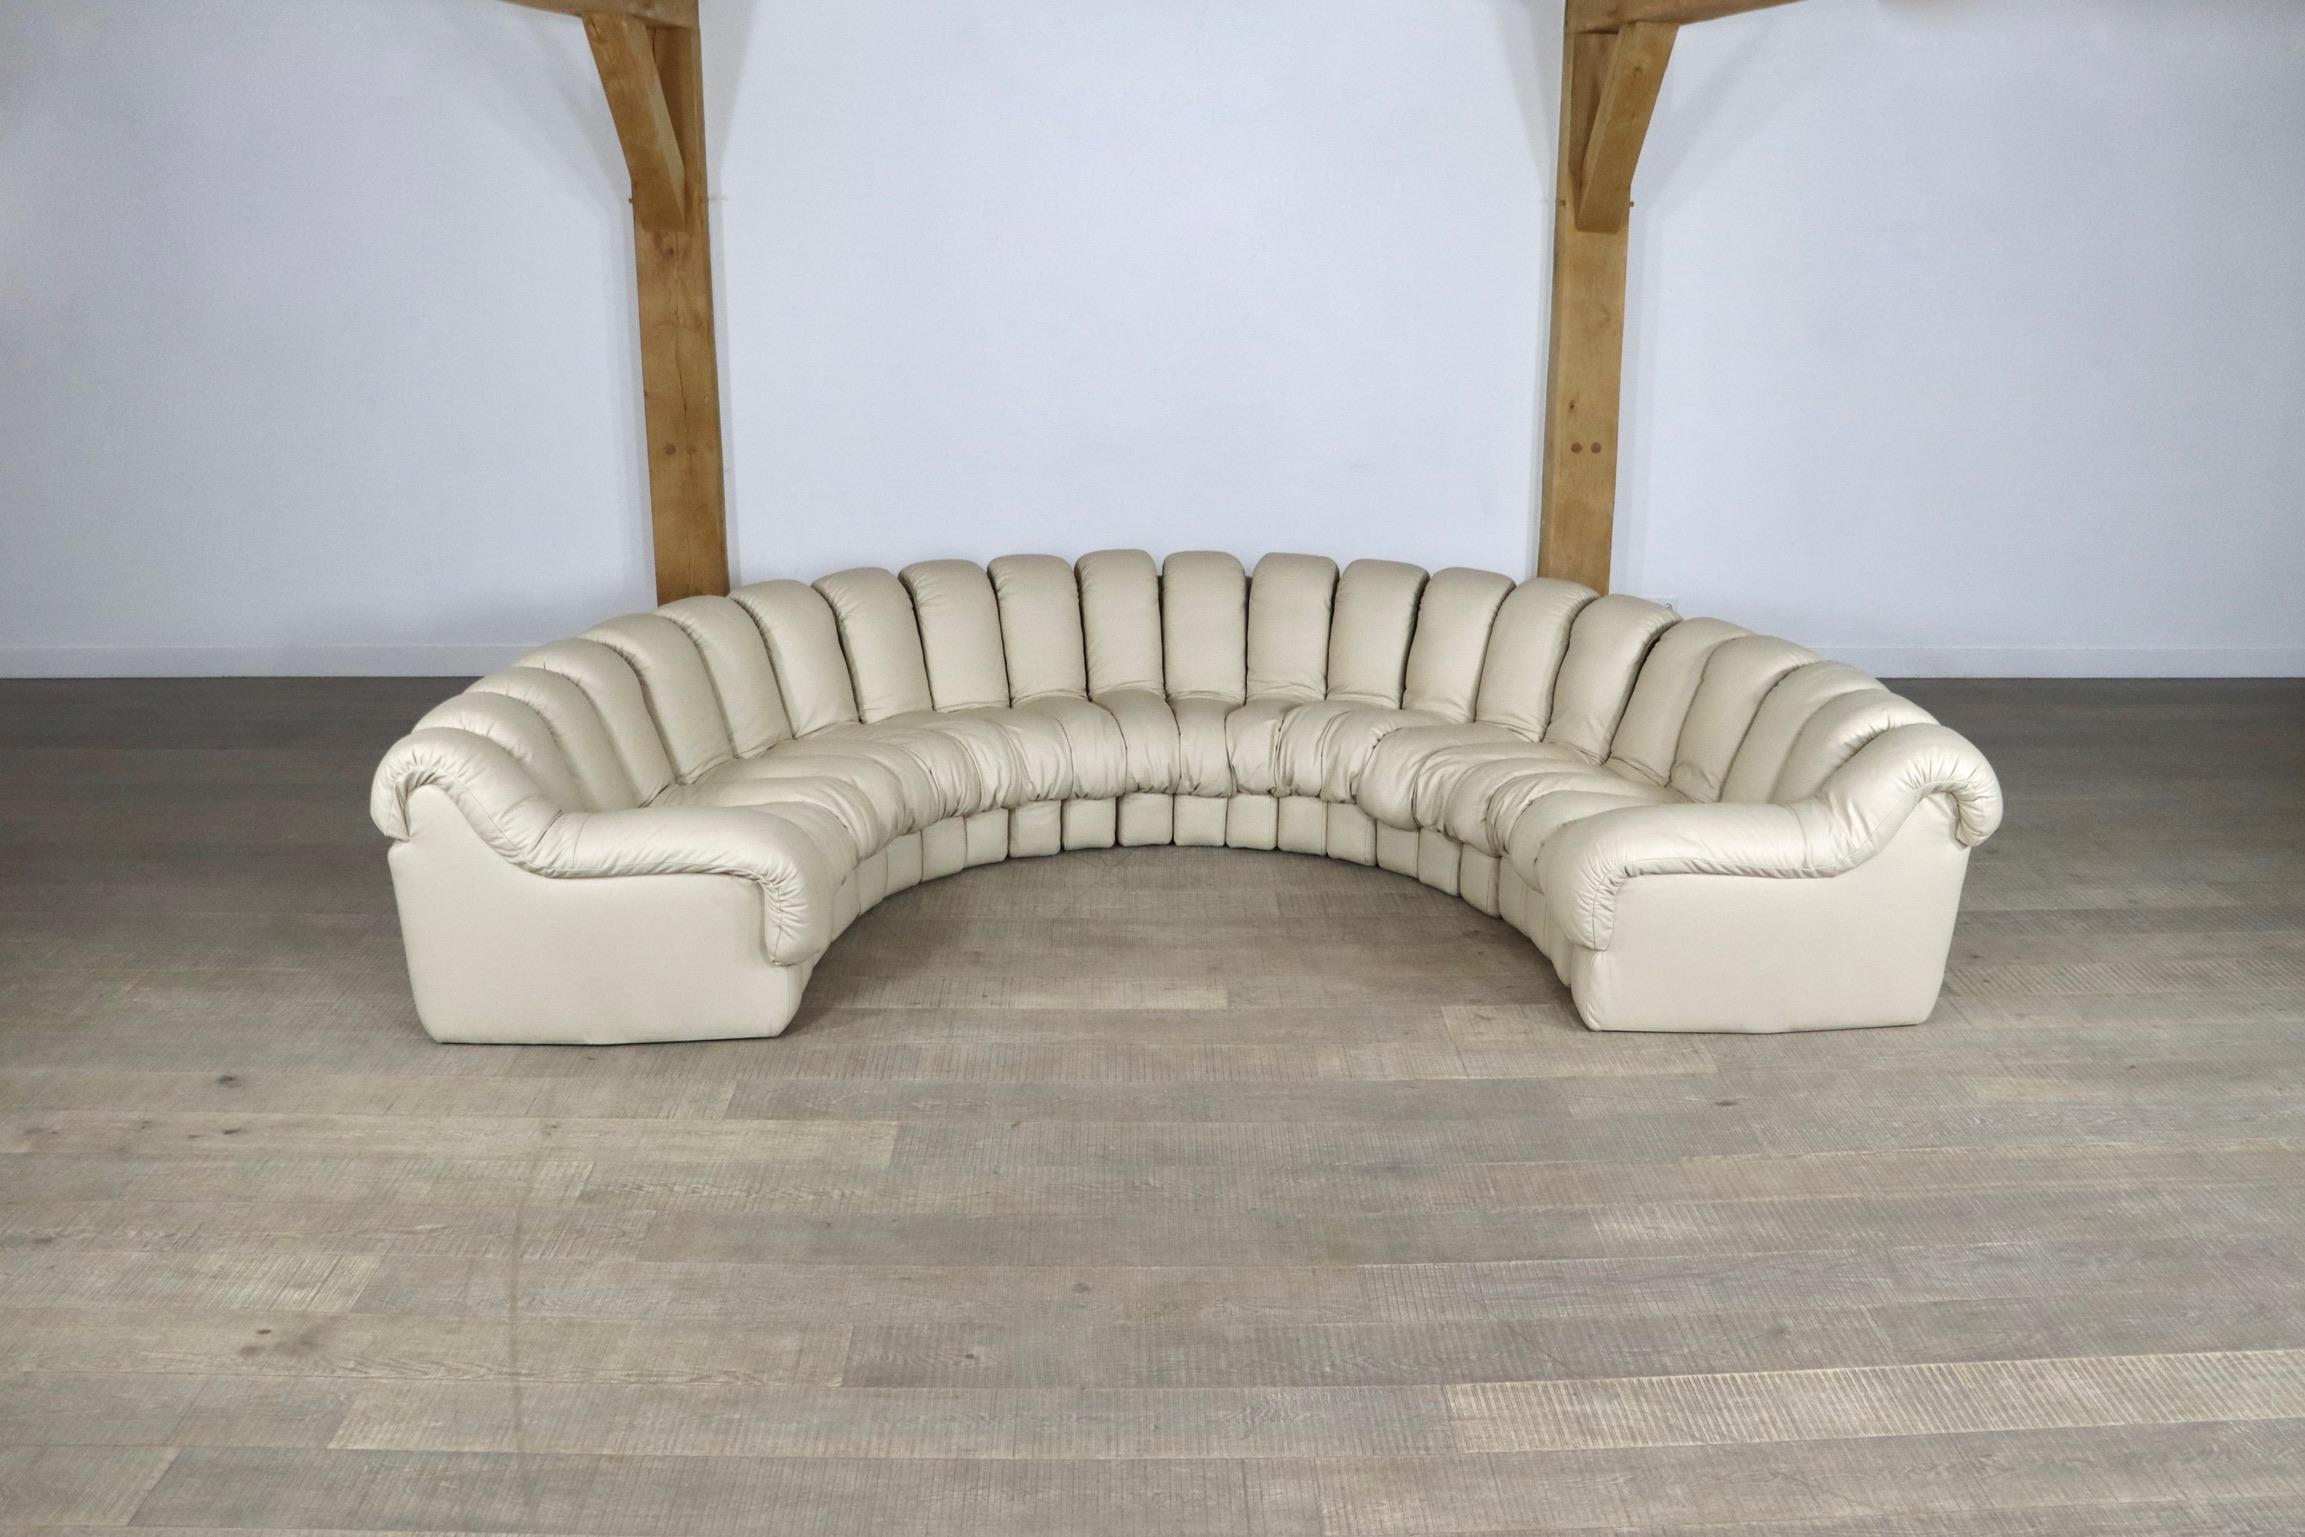 De Sede Ds 600 “Non-Stop” Cream Leather Sofa by Heinz Ulrich, Ueli Berger  8